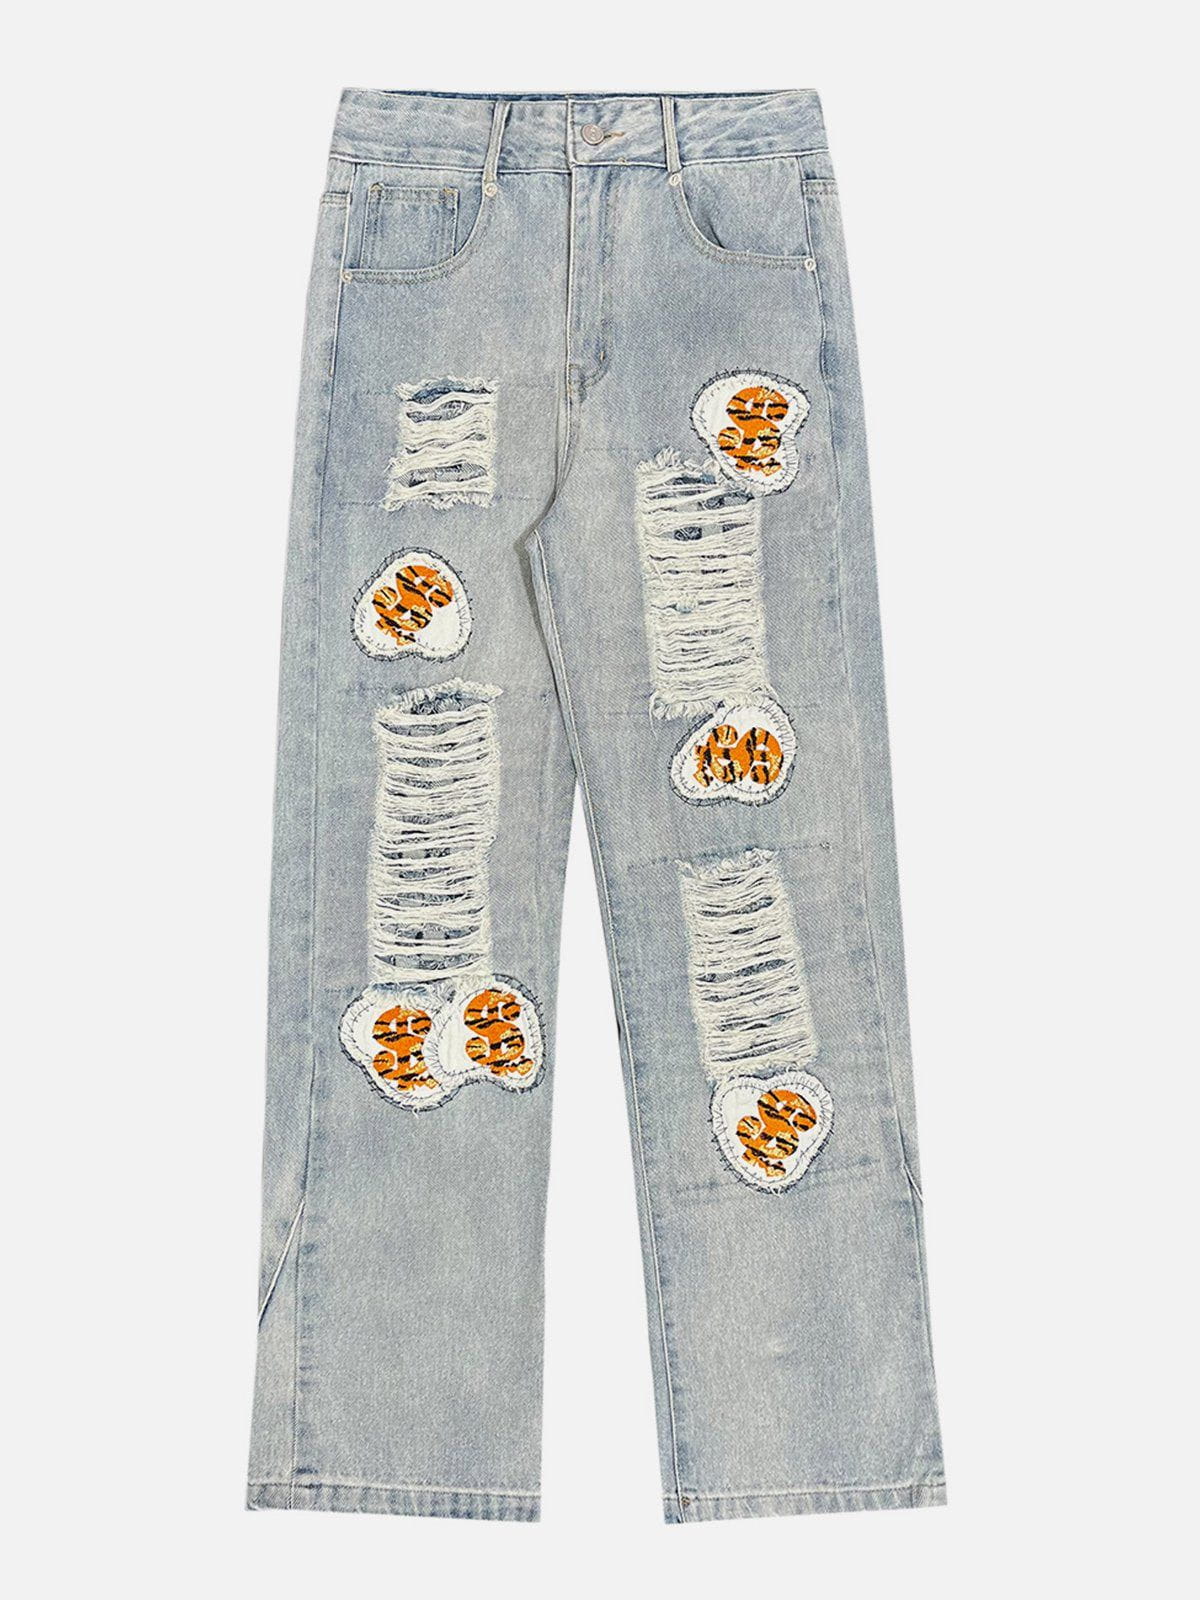 Eprezzy® - Letter Embroidery Holes Jeans Streetwear Fashion - eprezzy.com